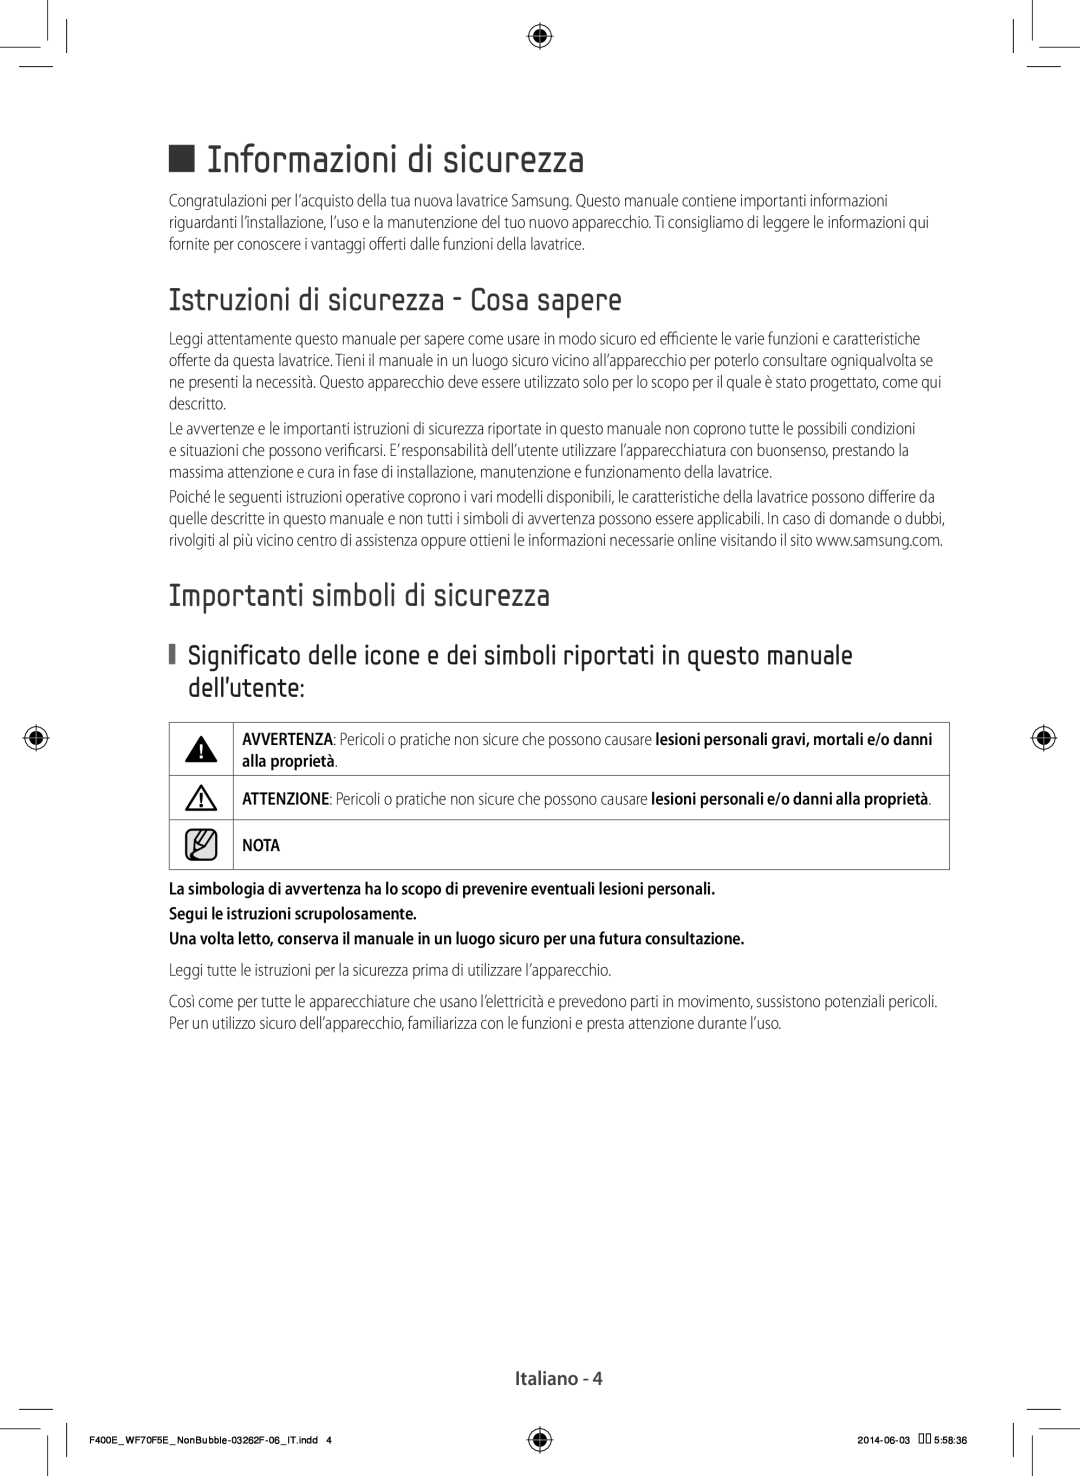 Samsung WF60F4E0N0W/ET Informazioni di sicurezza, Istruzioni di sicurezza - Cosa sapere, Importanti simboli di sicurezza 